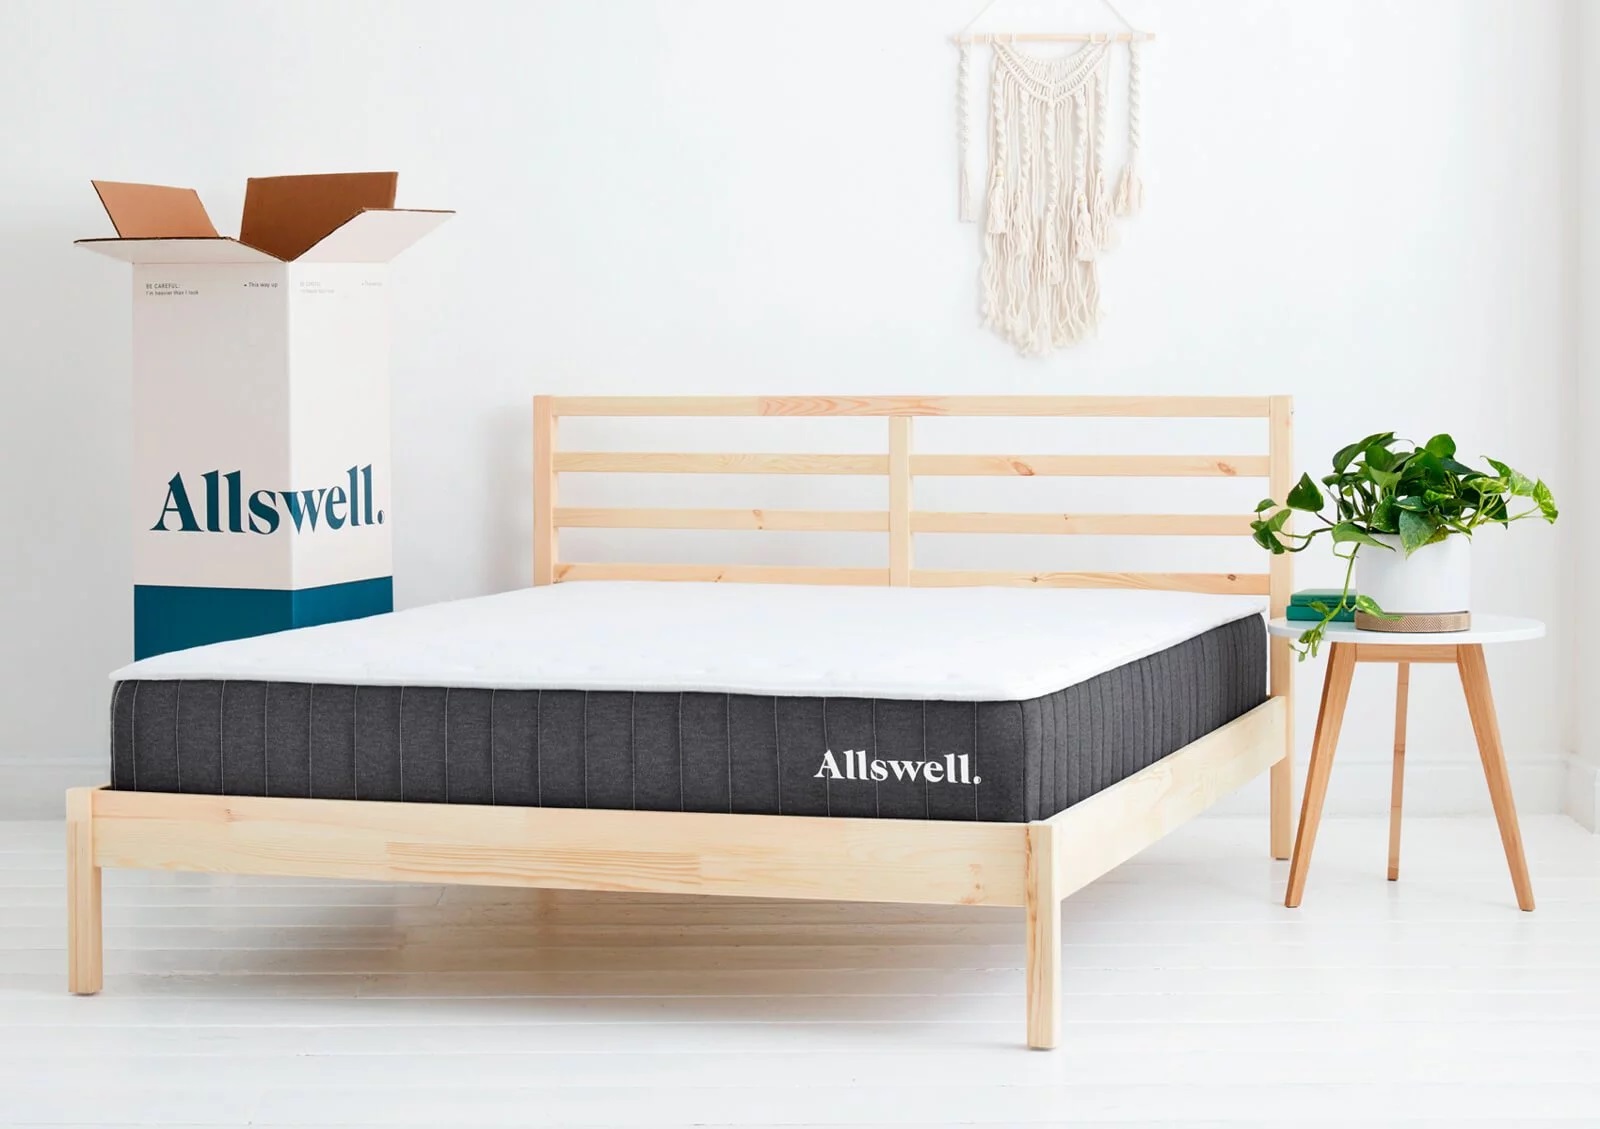 World’s best quality mattress by Serta - big discount